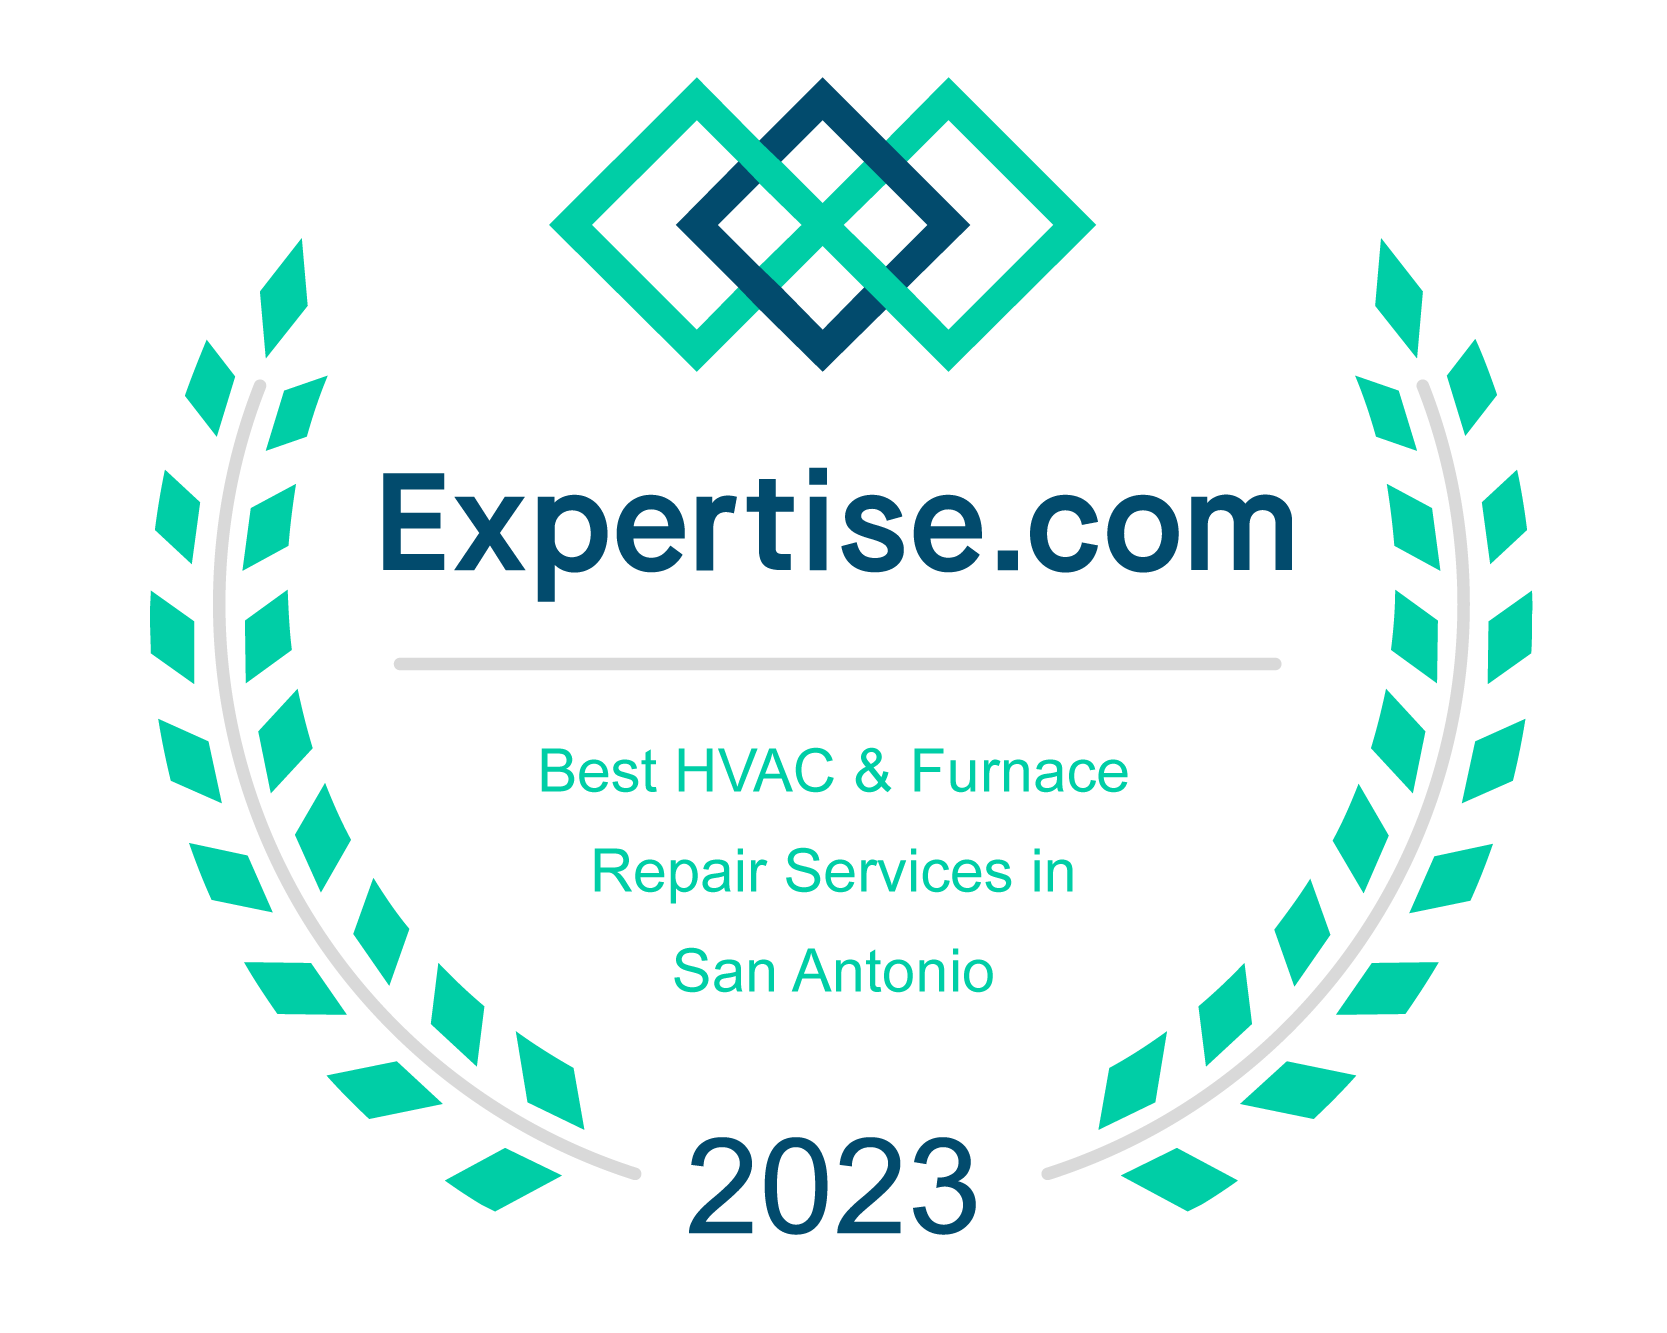 2023 expertise.com best HVAC and furnace repair services in San Antonio